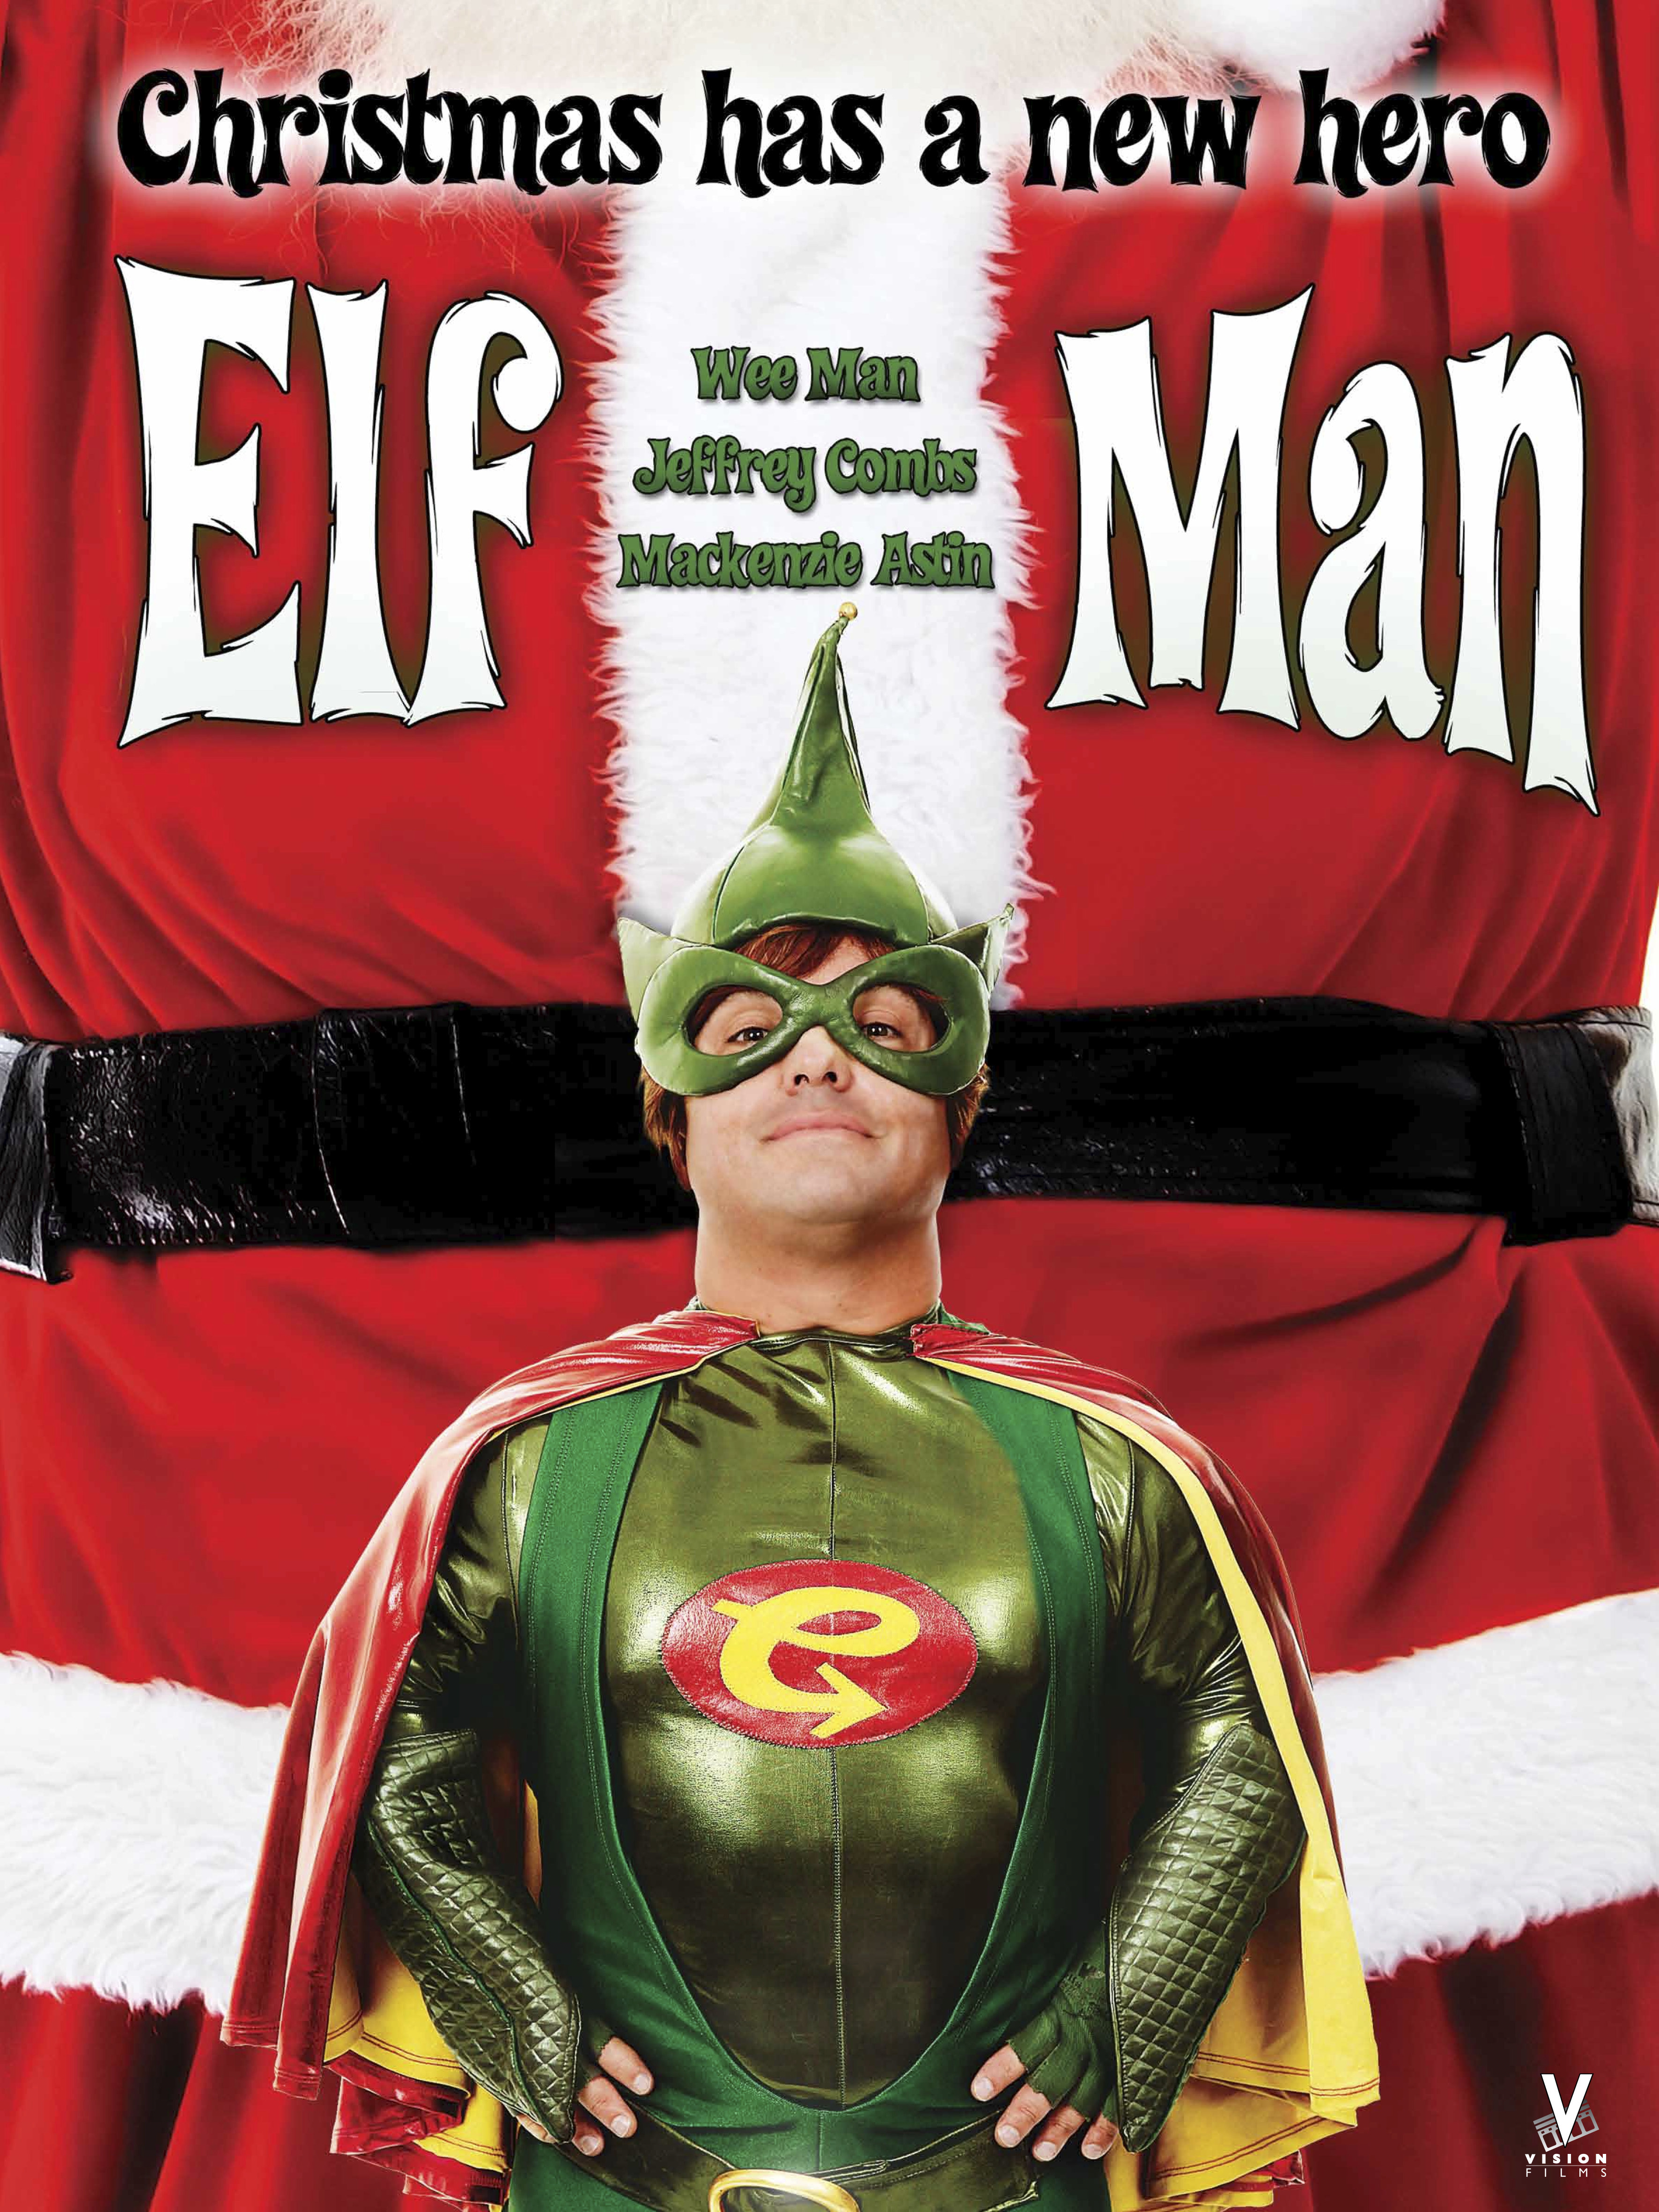 Elf-Man (2012) Screenshot 2 